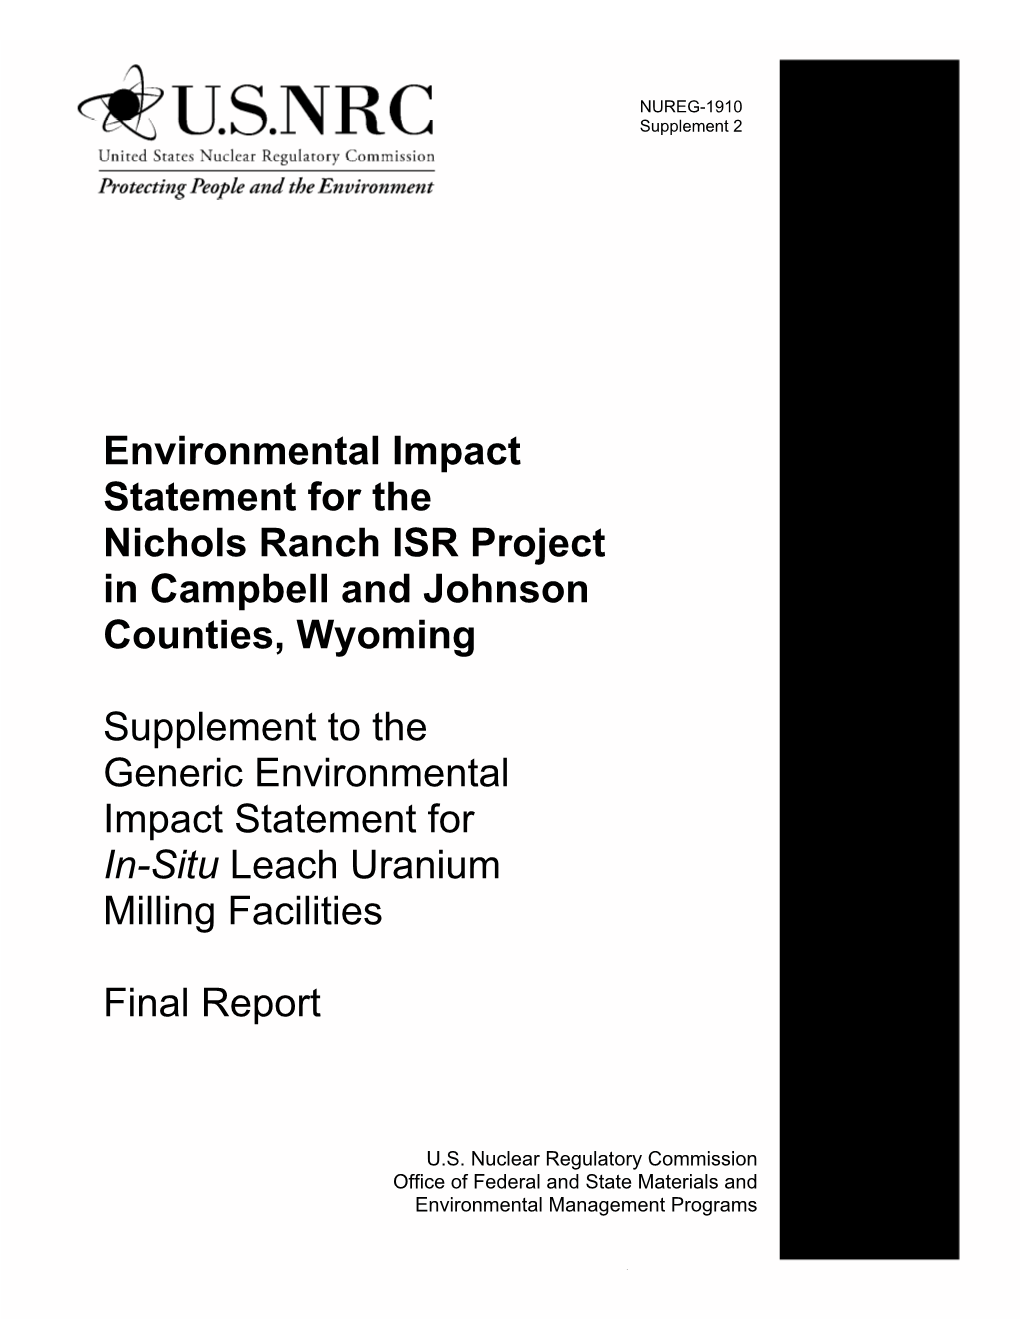 Original Supplemental Environmental Impact Statement